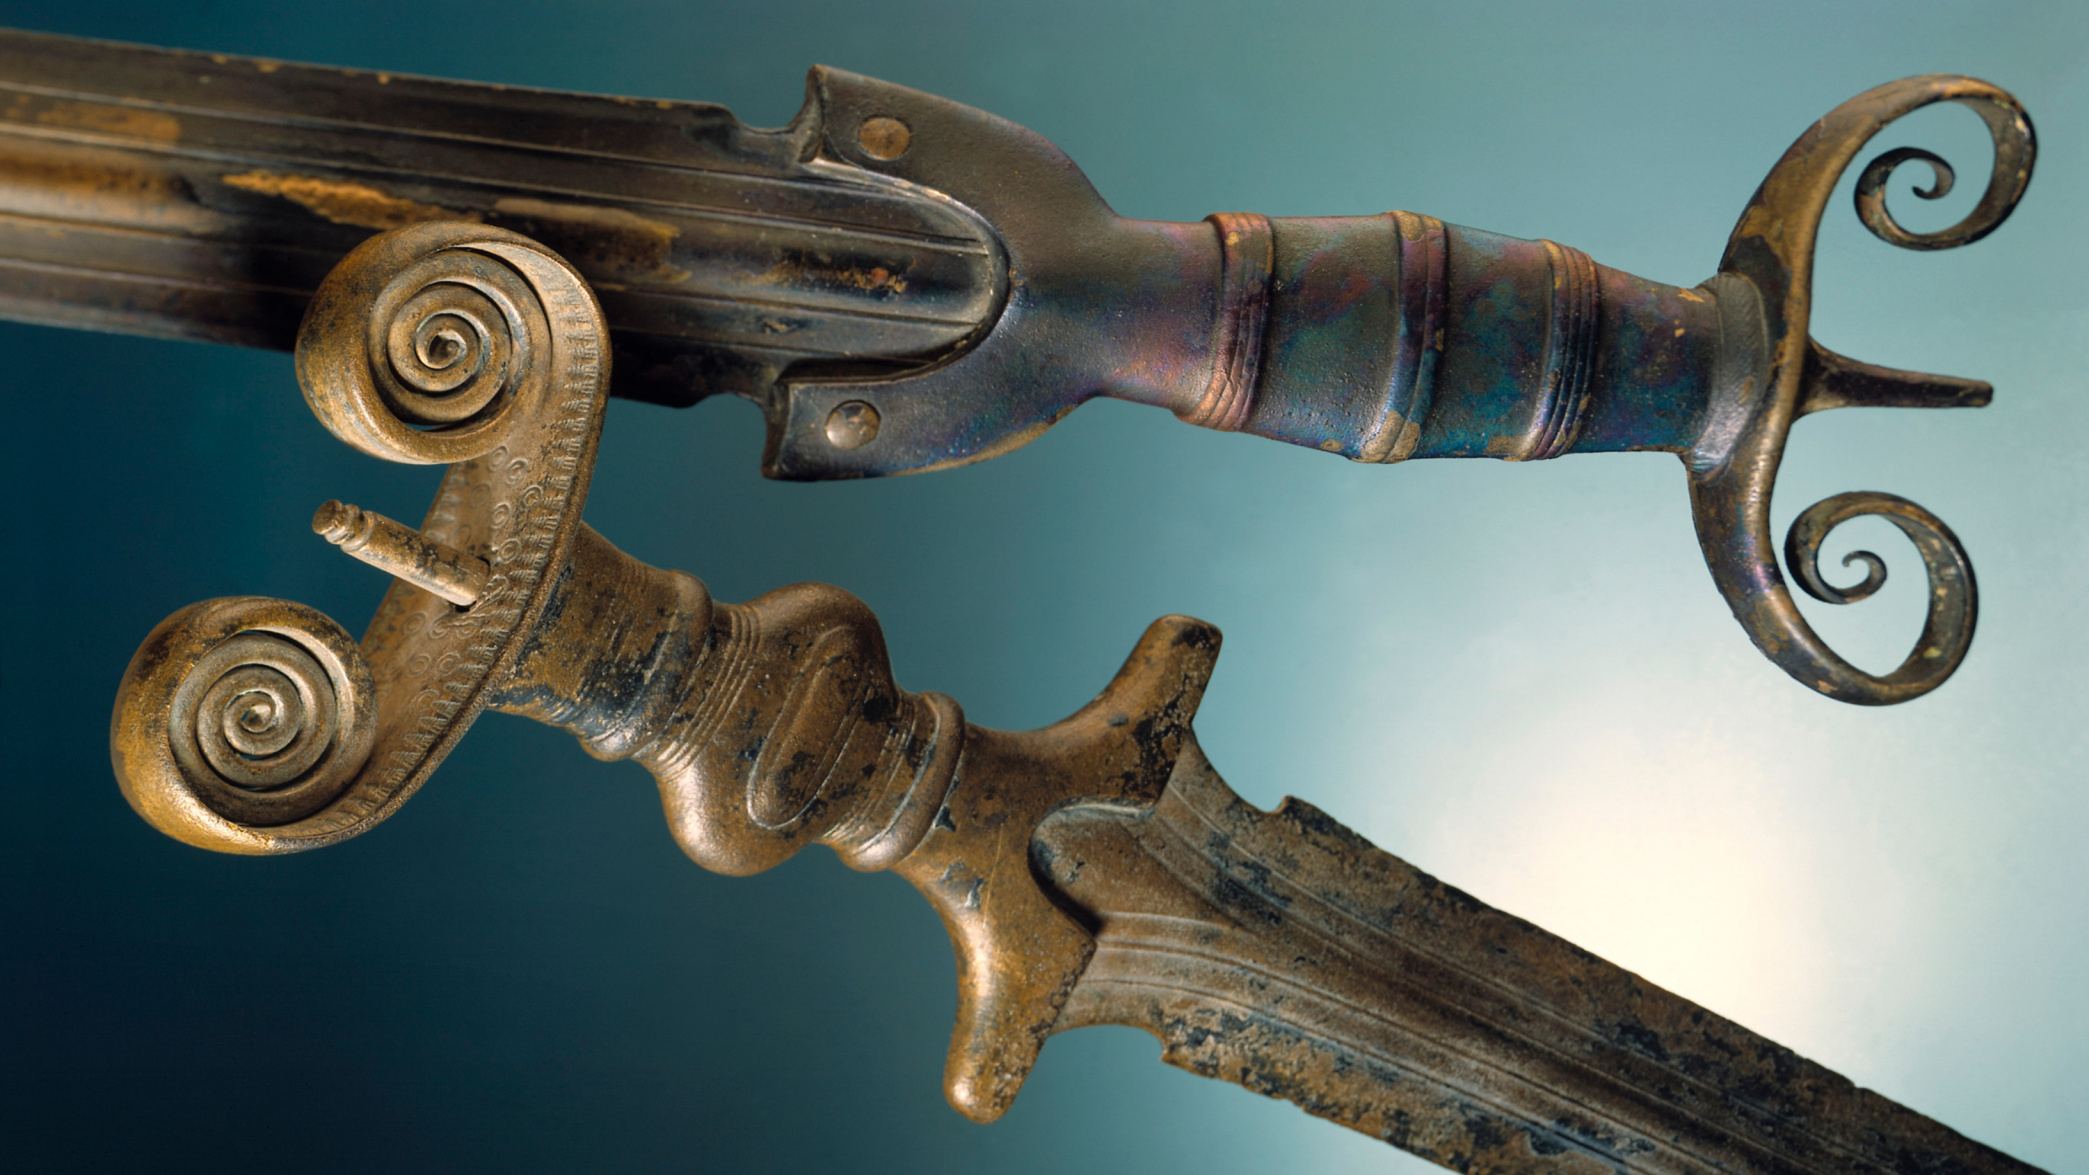 Antenna swords of the Hallstatt B period (c. 10th century BC), found near Lake Neuchâtel